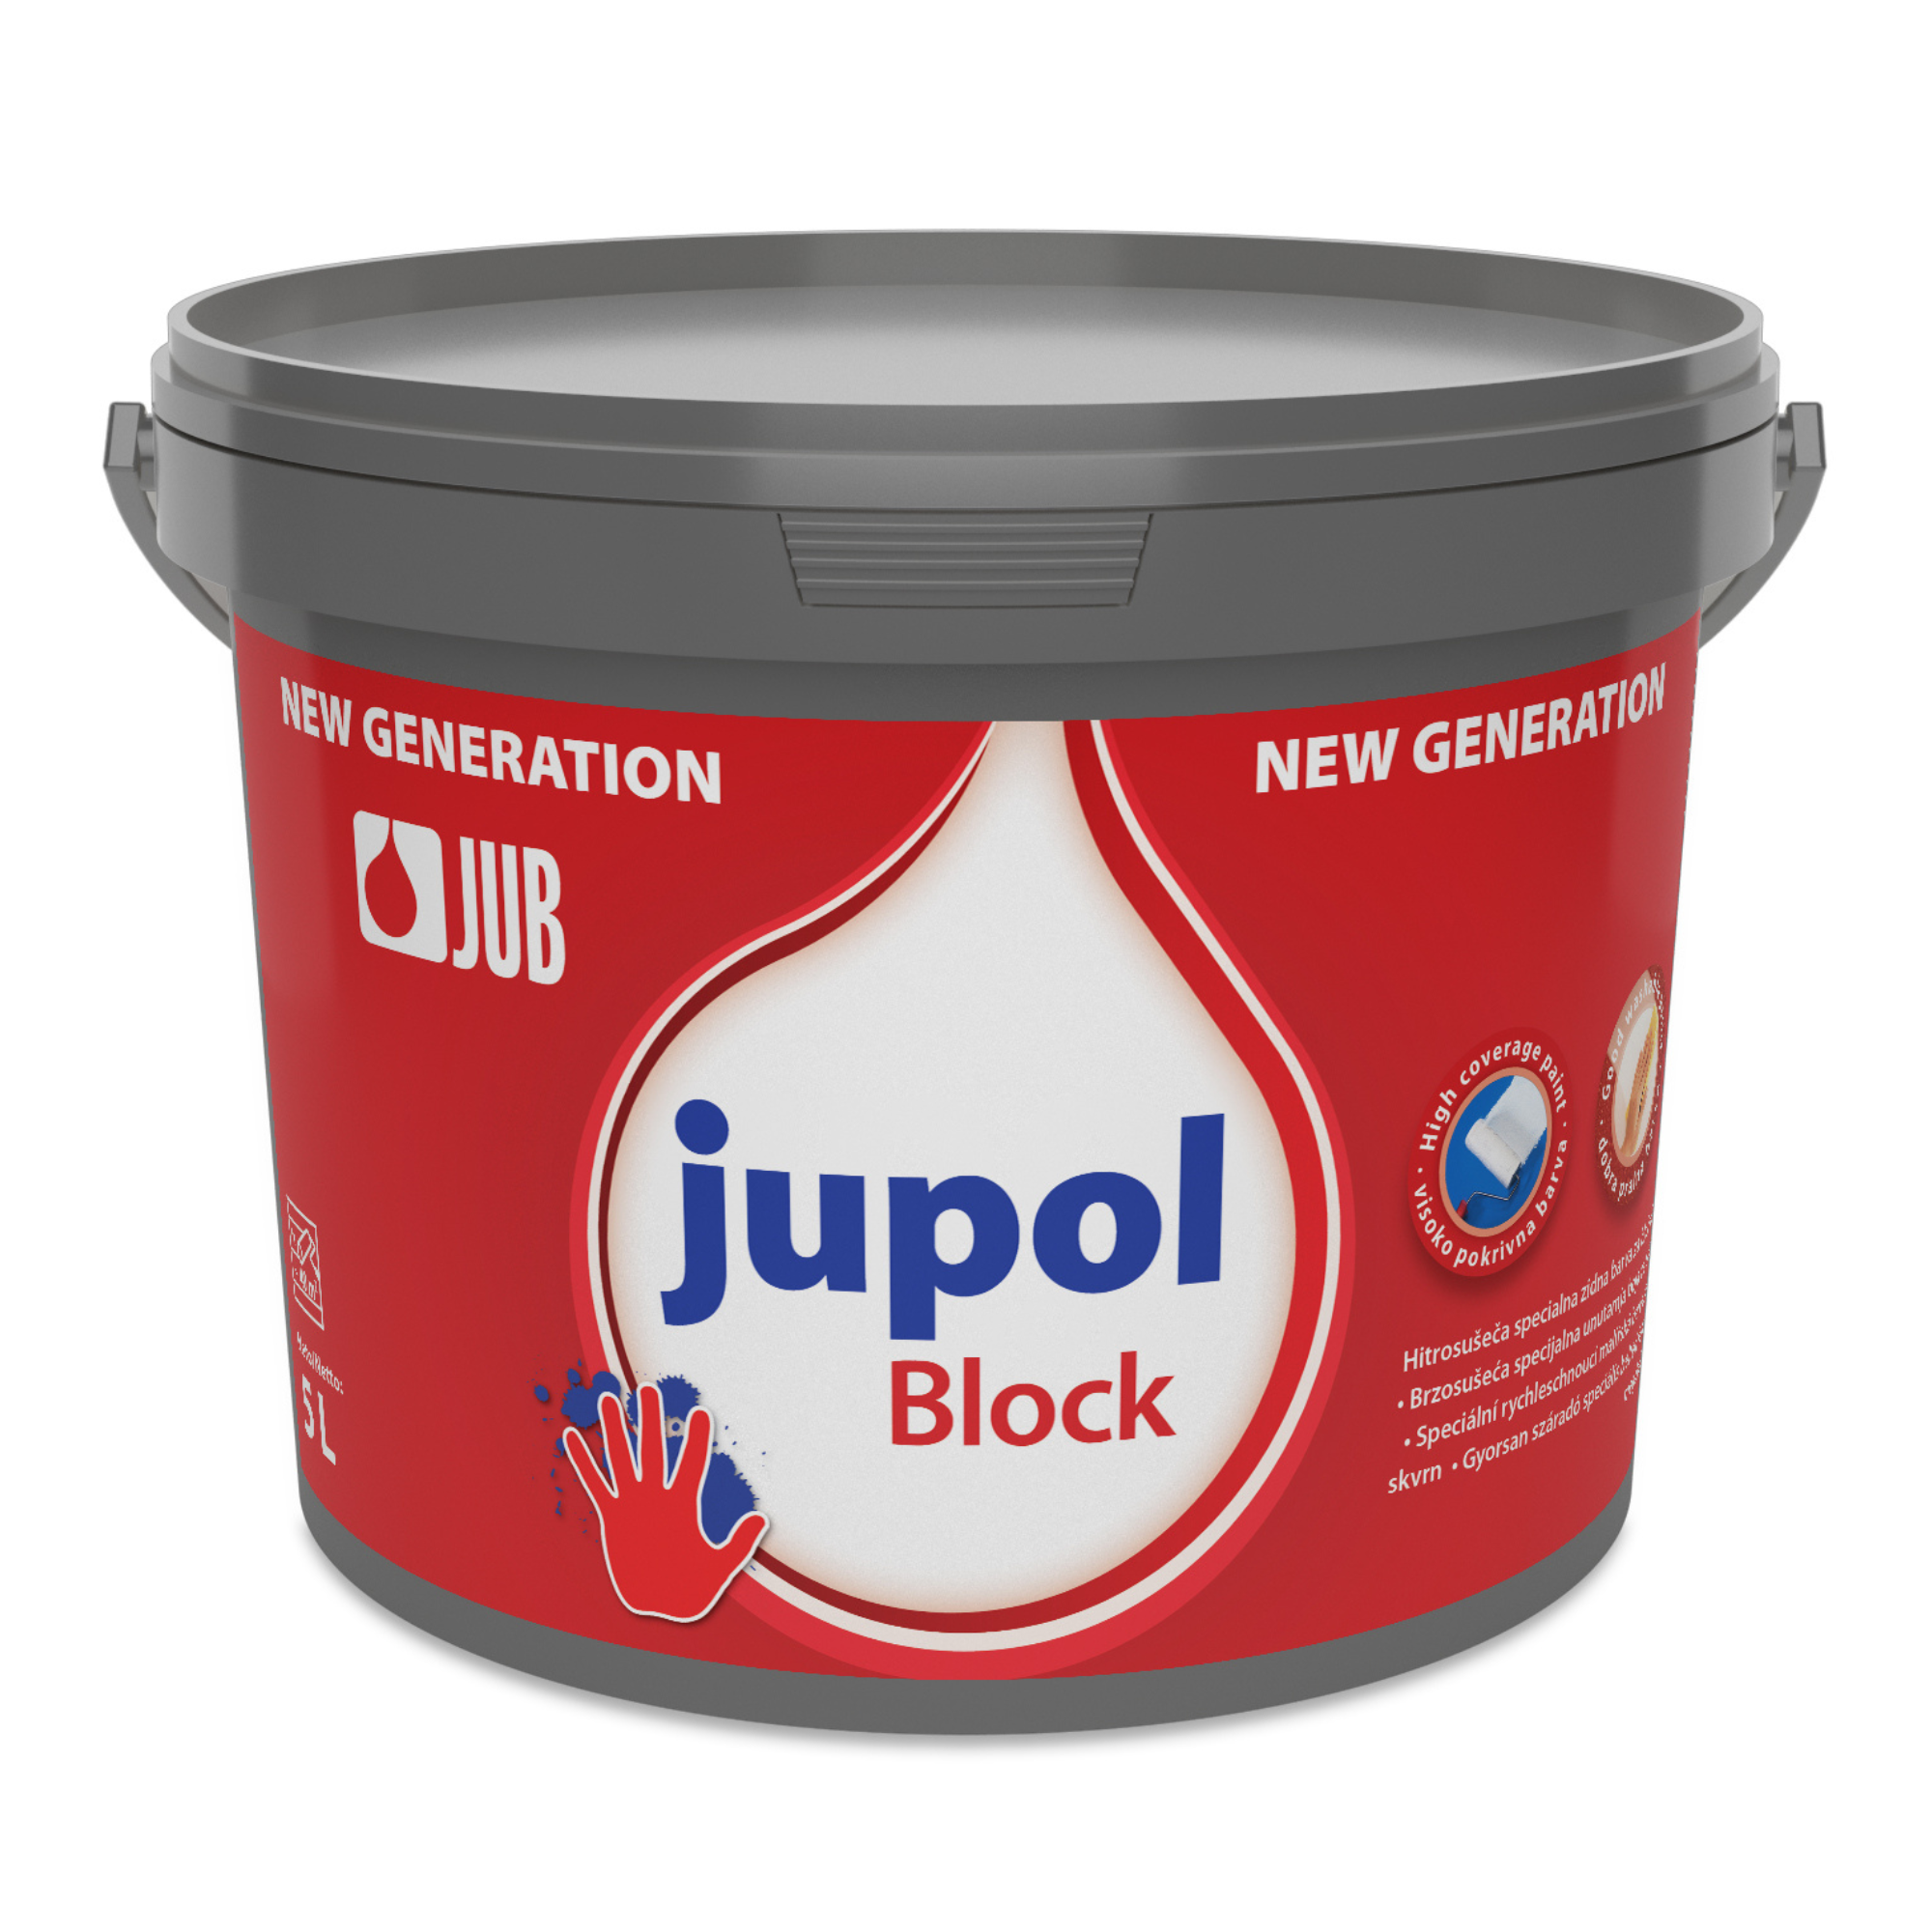 JUP JUPOL Block NEW GENERATION farba na blokovanie fľakov 2 l